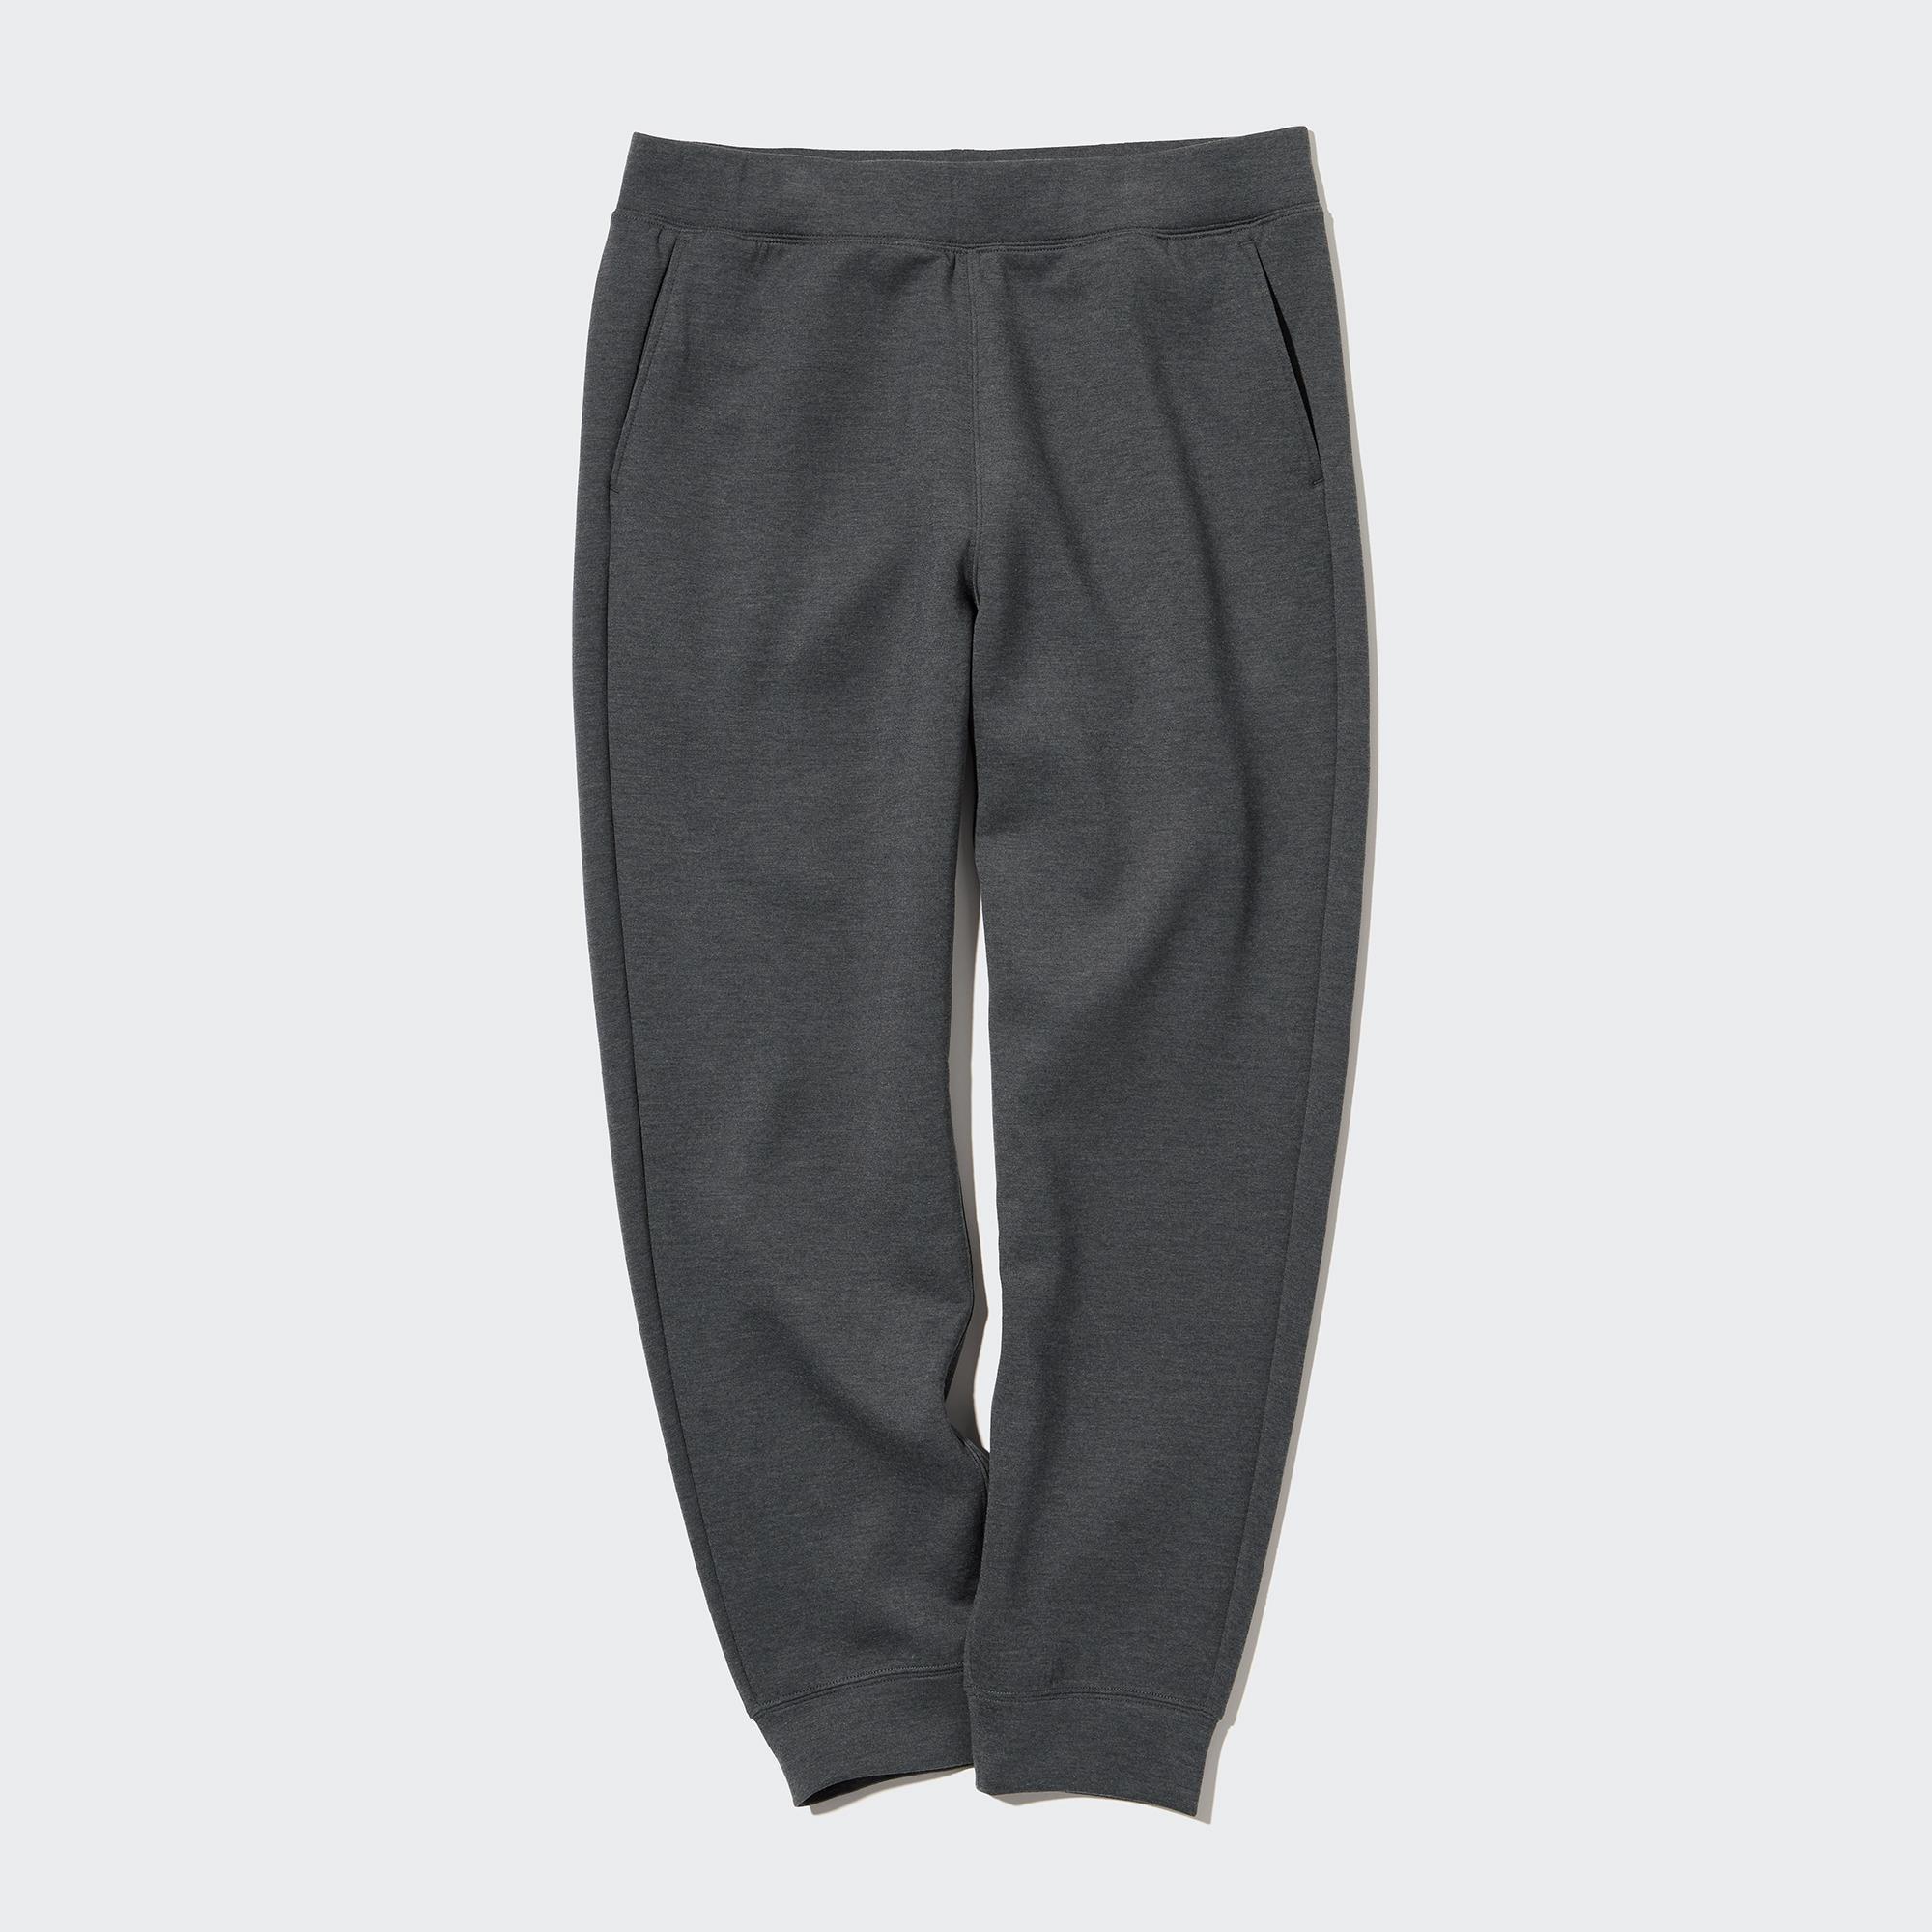 Mens Stretch Dry Sweatpants Dark Gray 3XL UNIQLO US Product Image